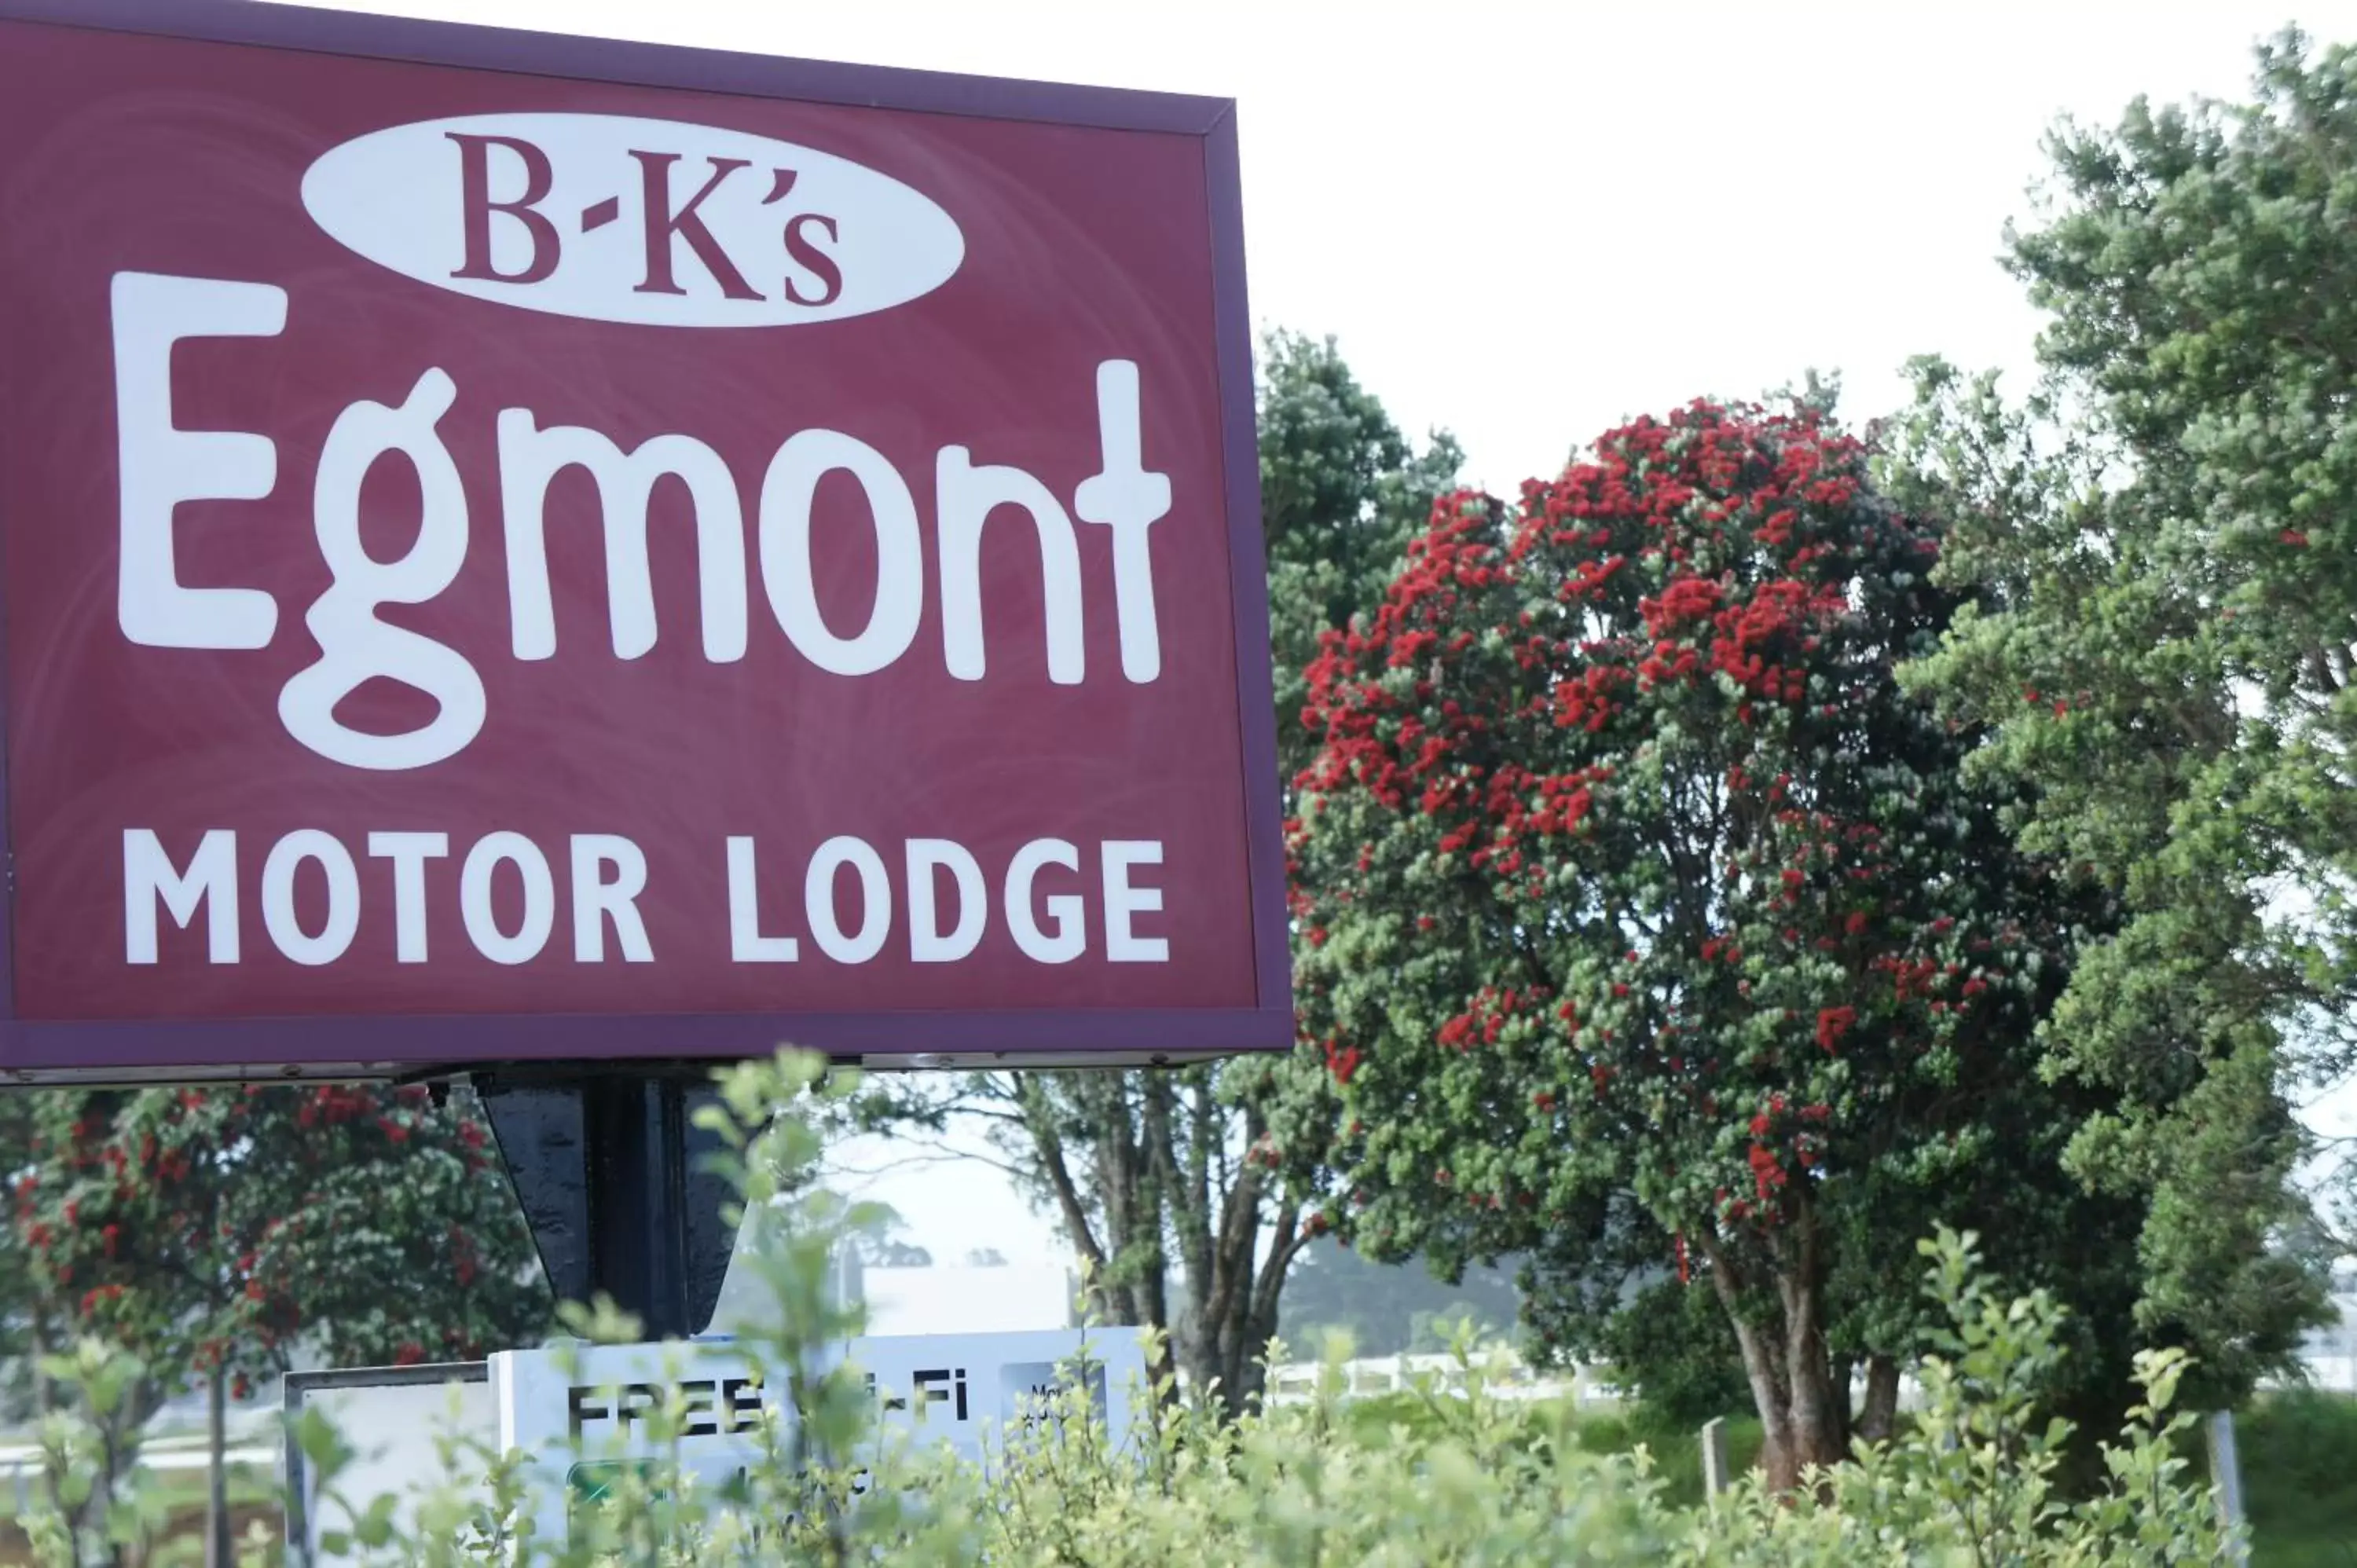 Facade/entrance in Bks Egmont Motor Lodge